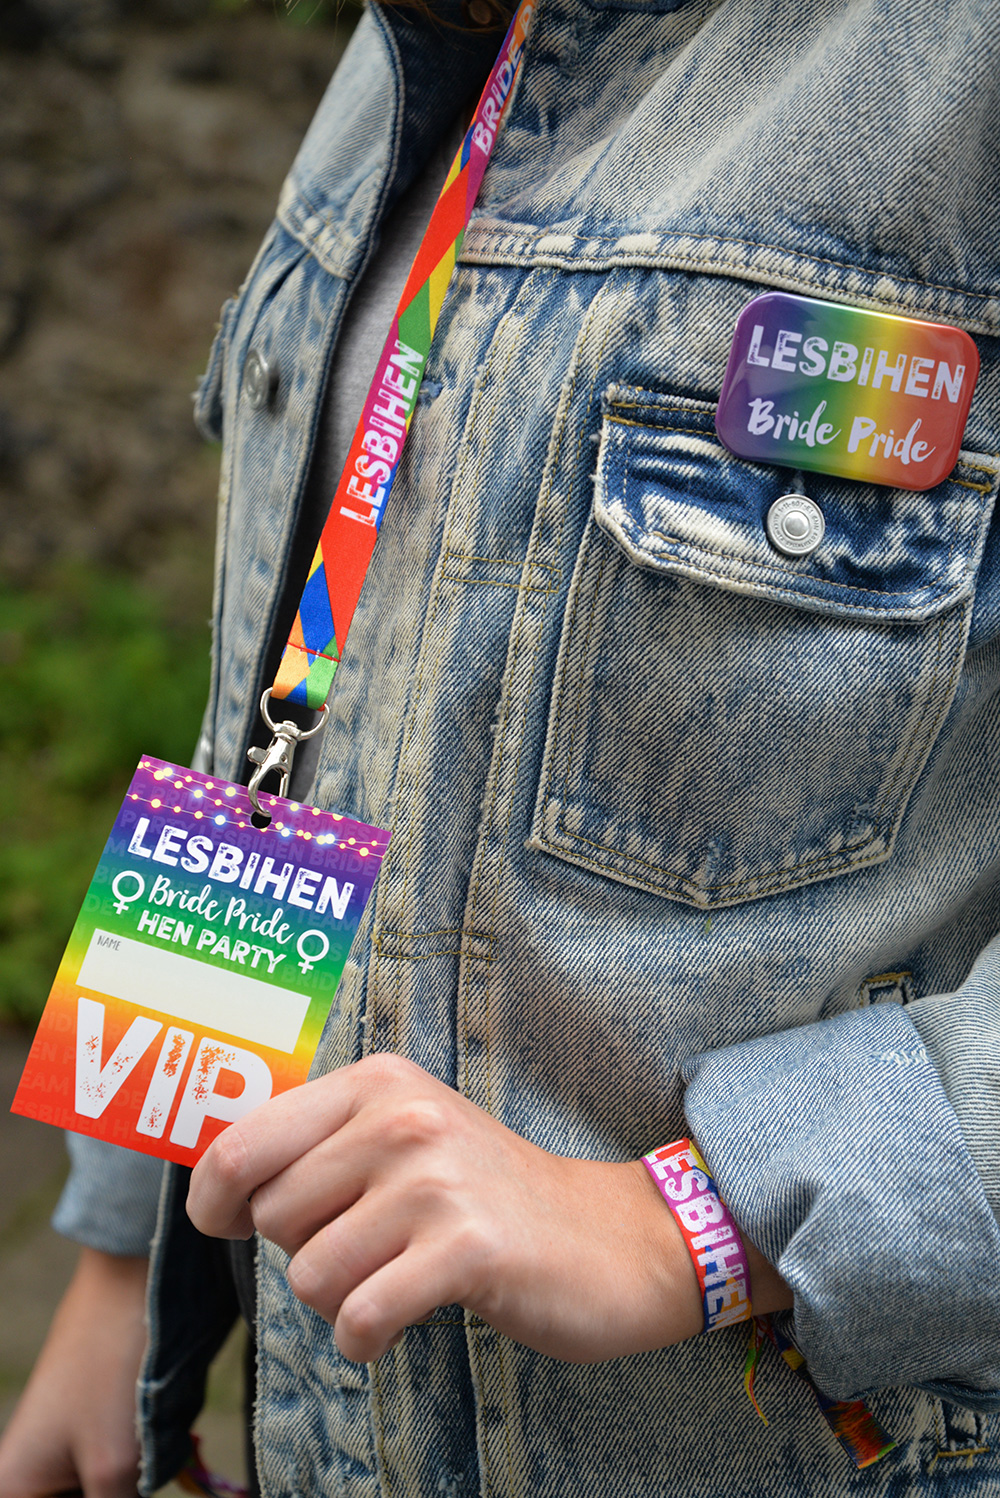 lesbihen lesbian gay hen party accessories 